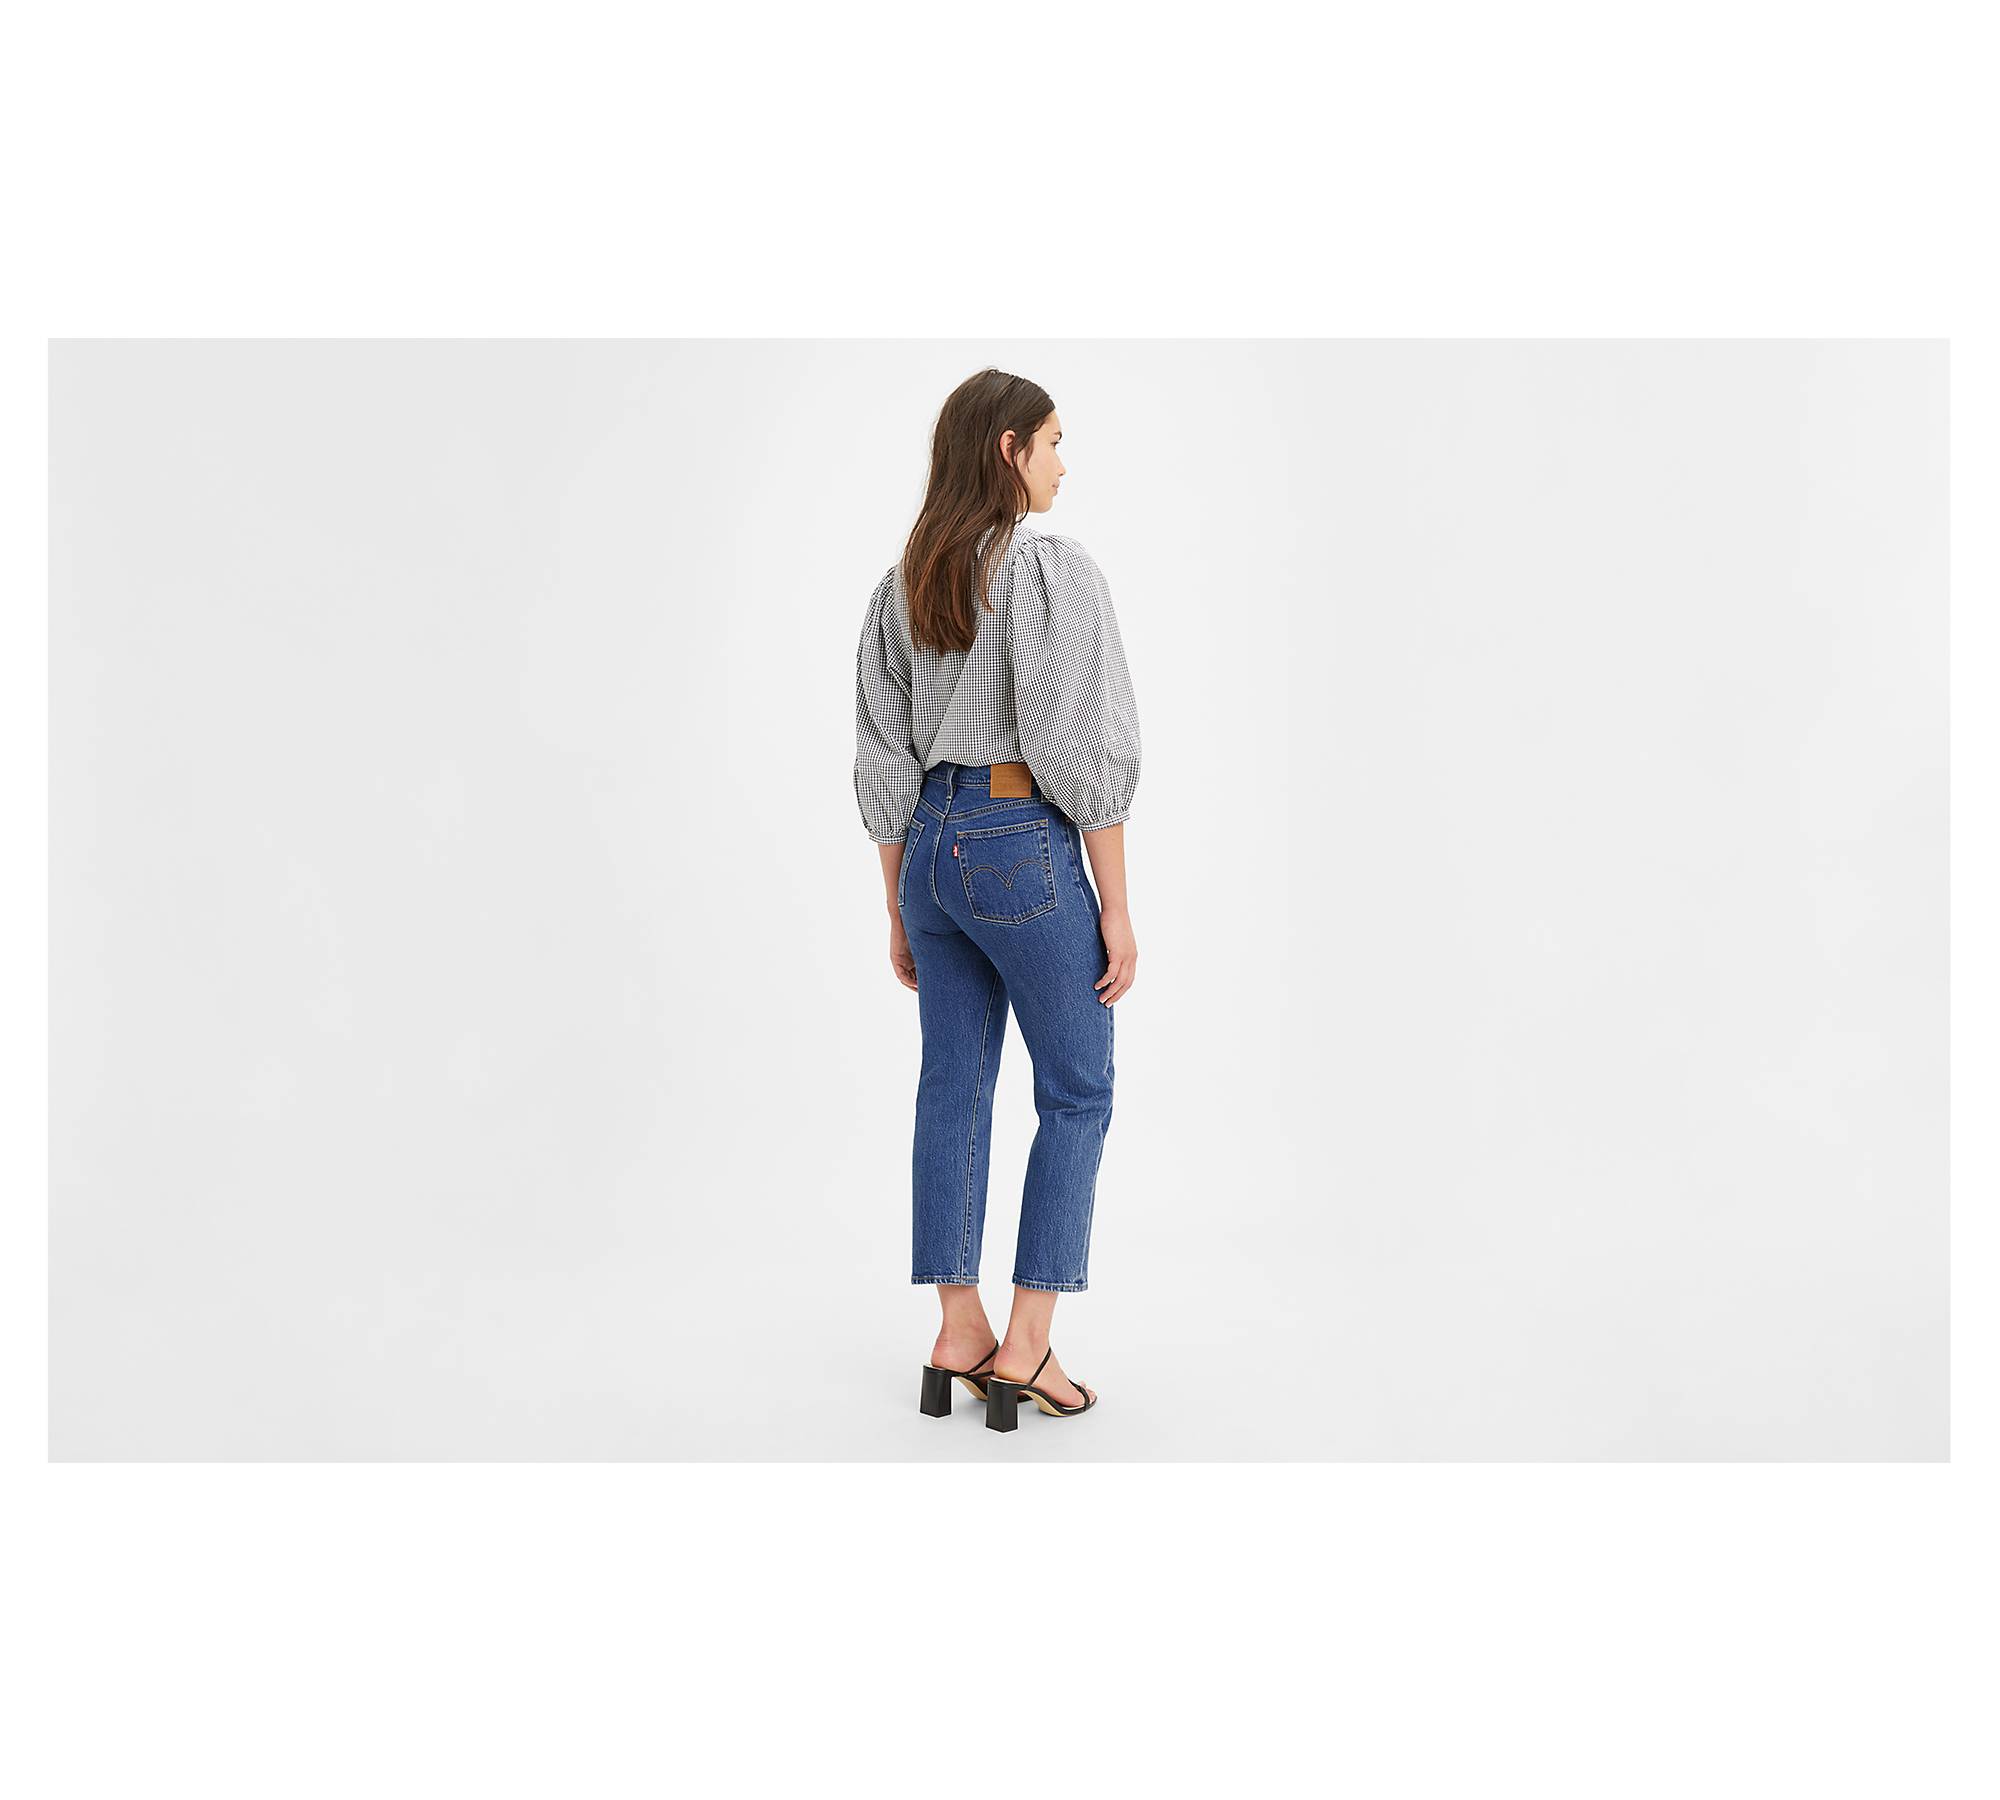 Wedgie Straight Fit Women's Jeans - Medium Wash